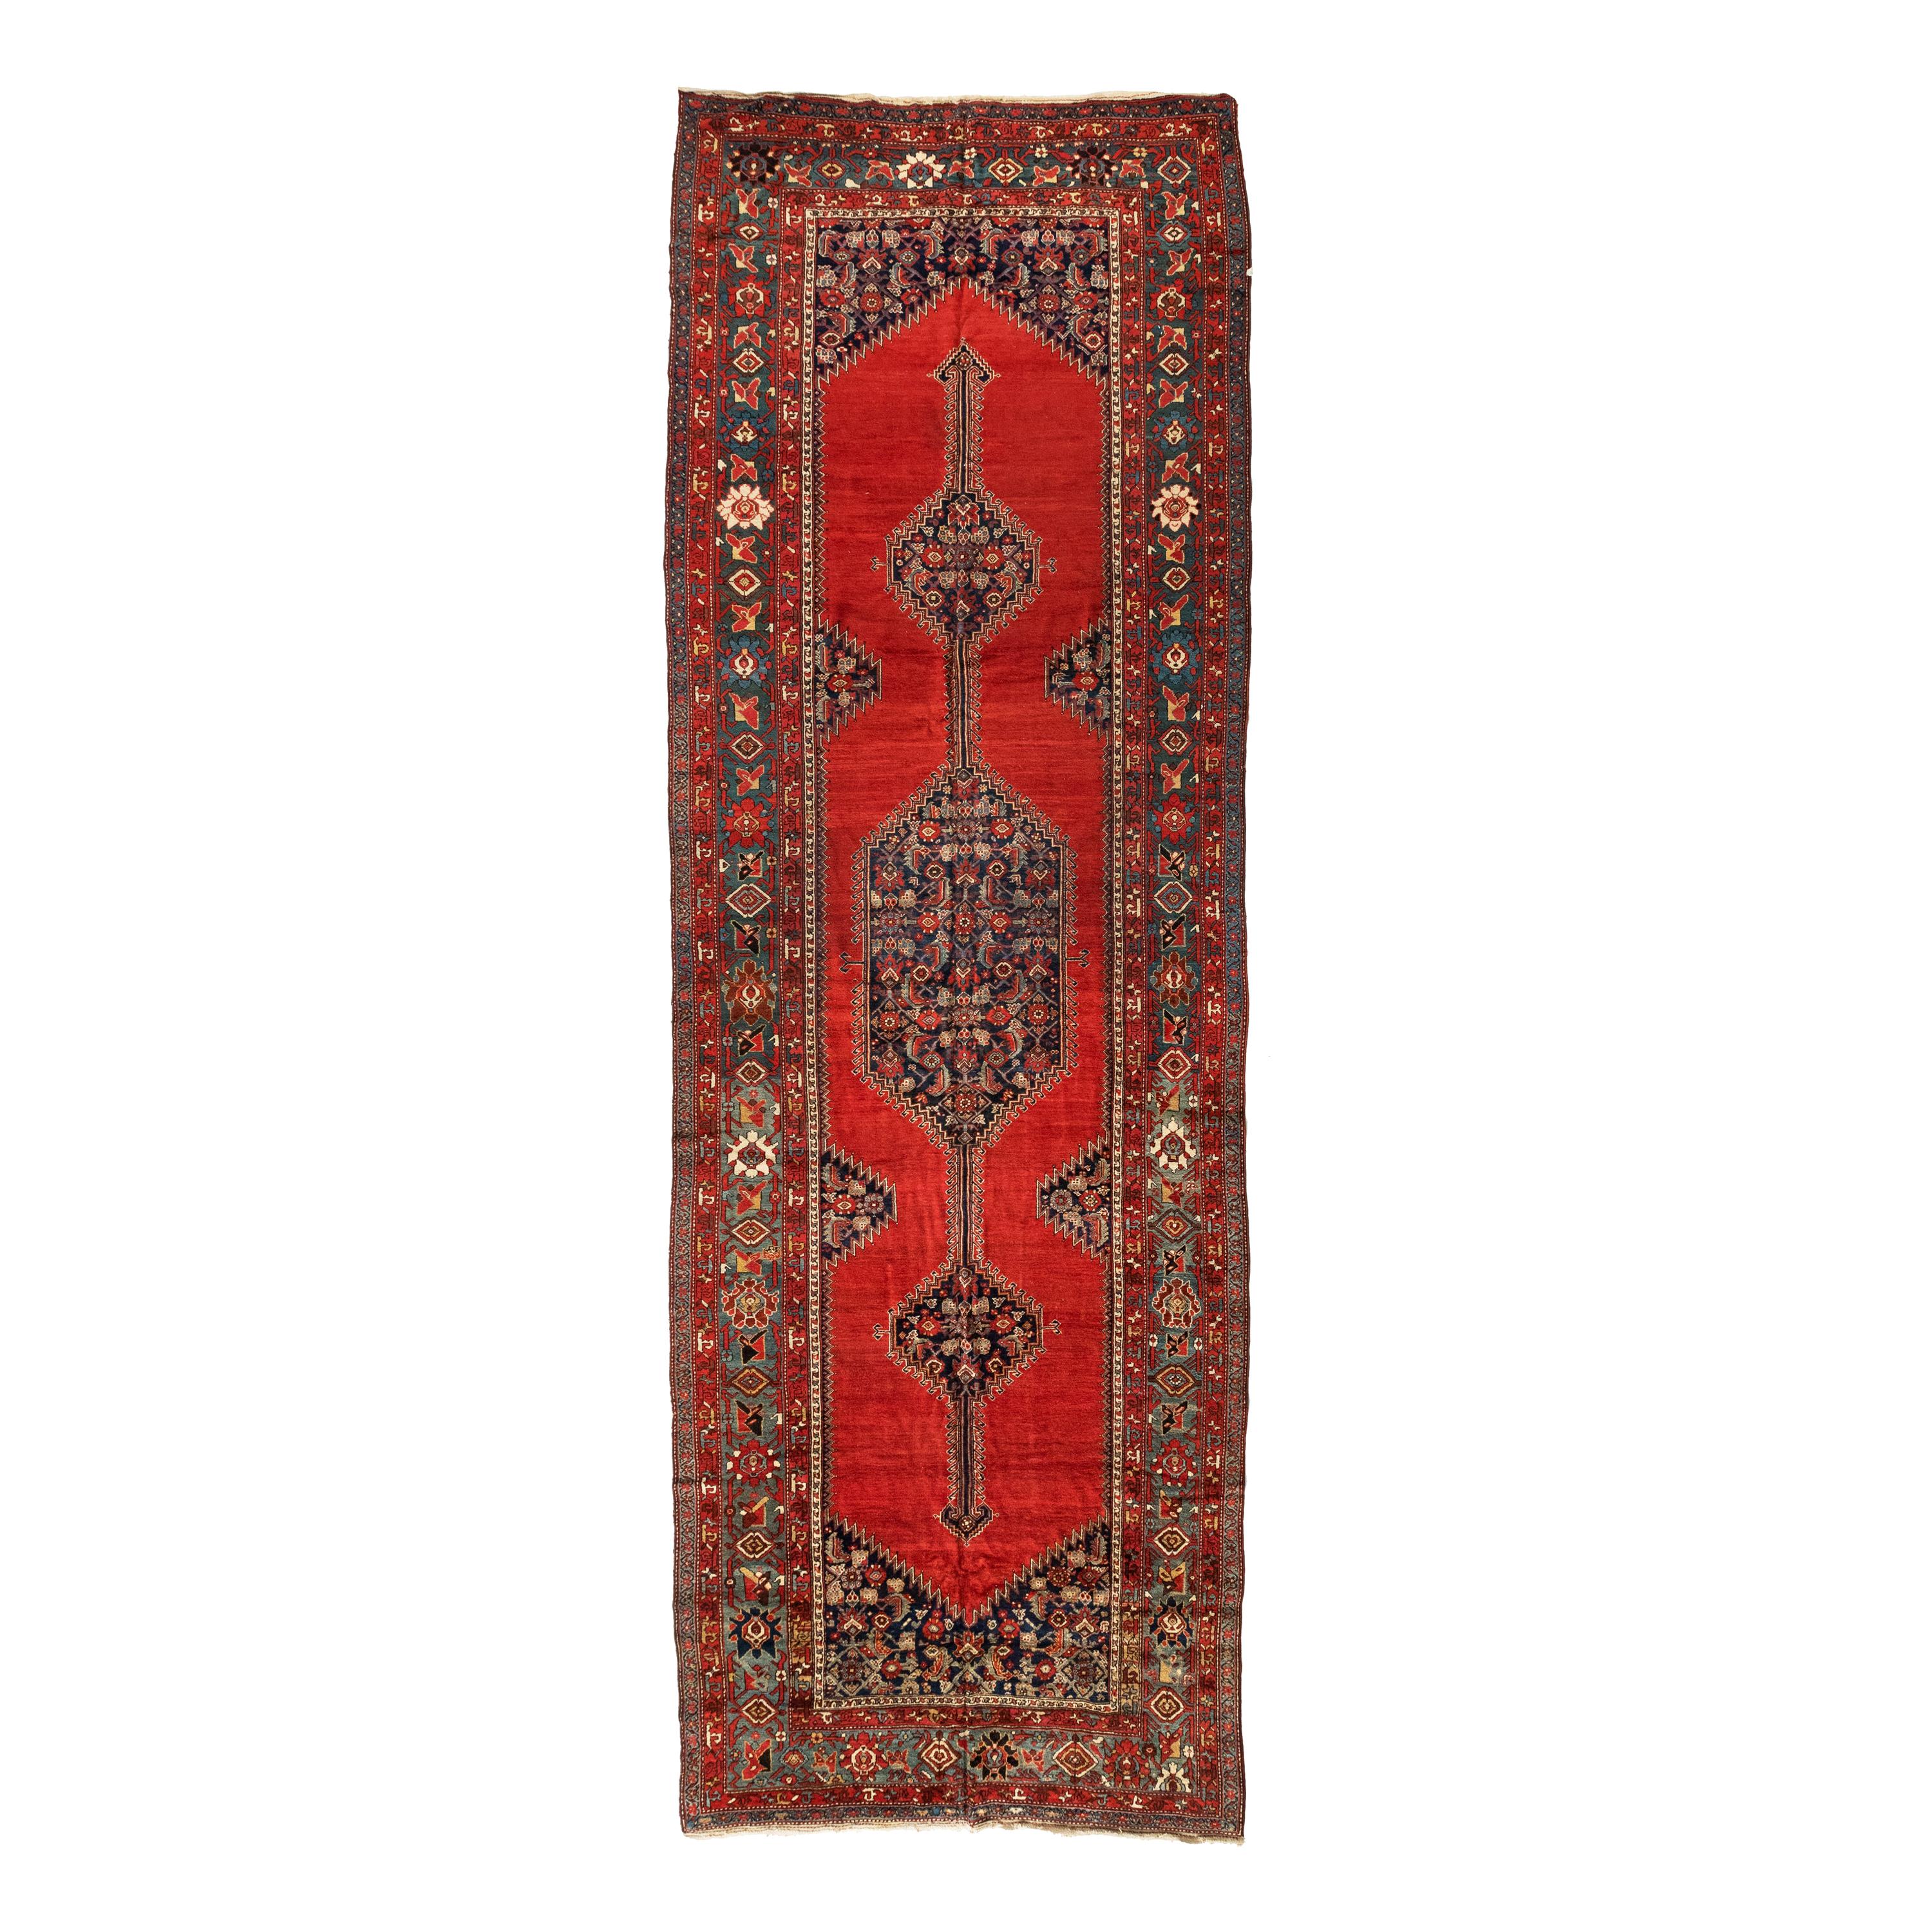 Antique Large Northwest Persia Bijar Geometric Tribal Red Rug, circa 1900s-1920s